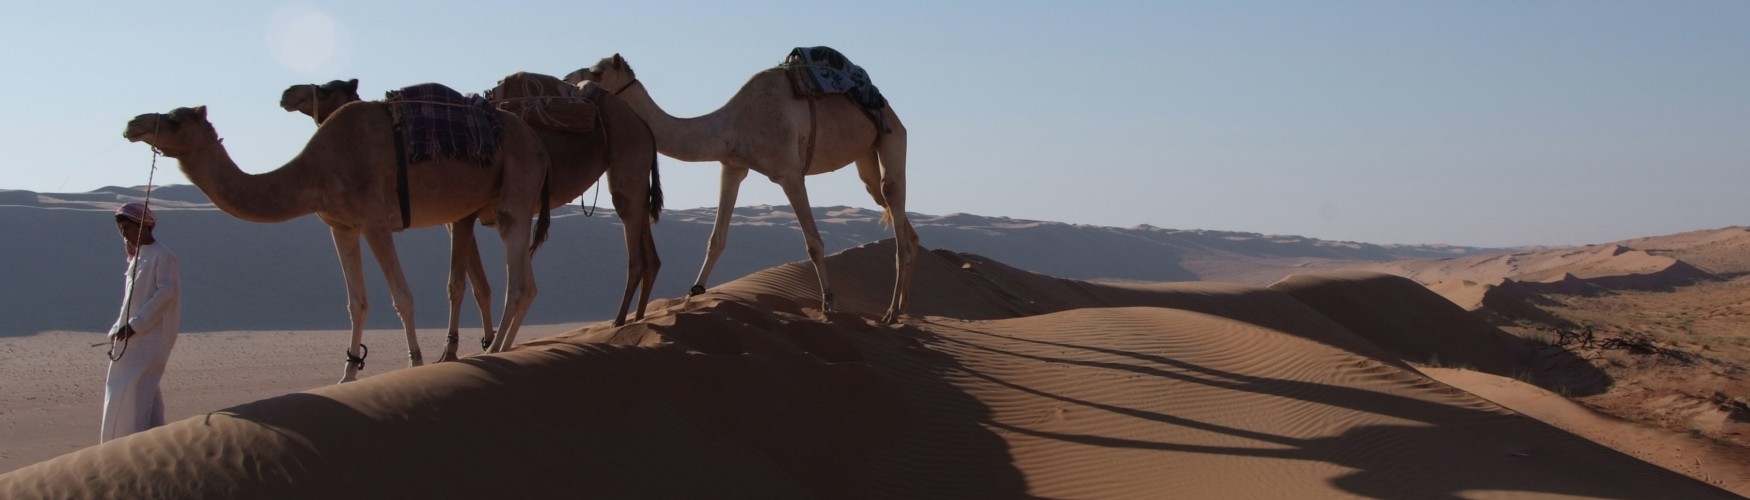 Desert Nights Camp - Al Wasil, Oman_Camel Safari